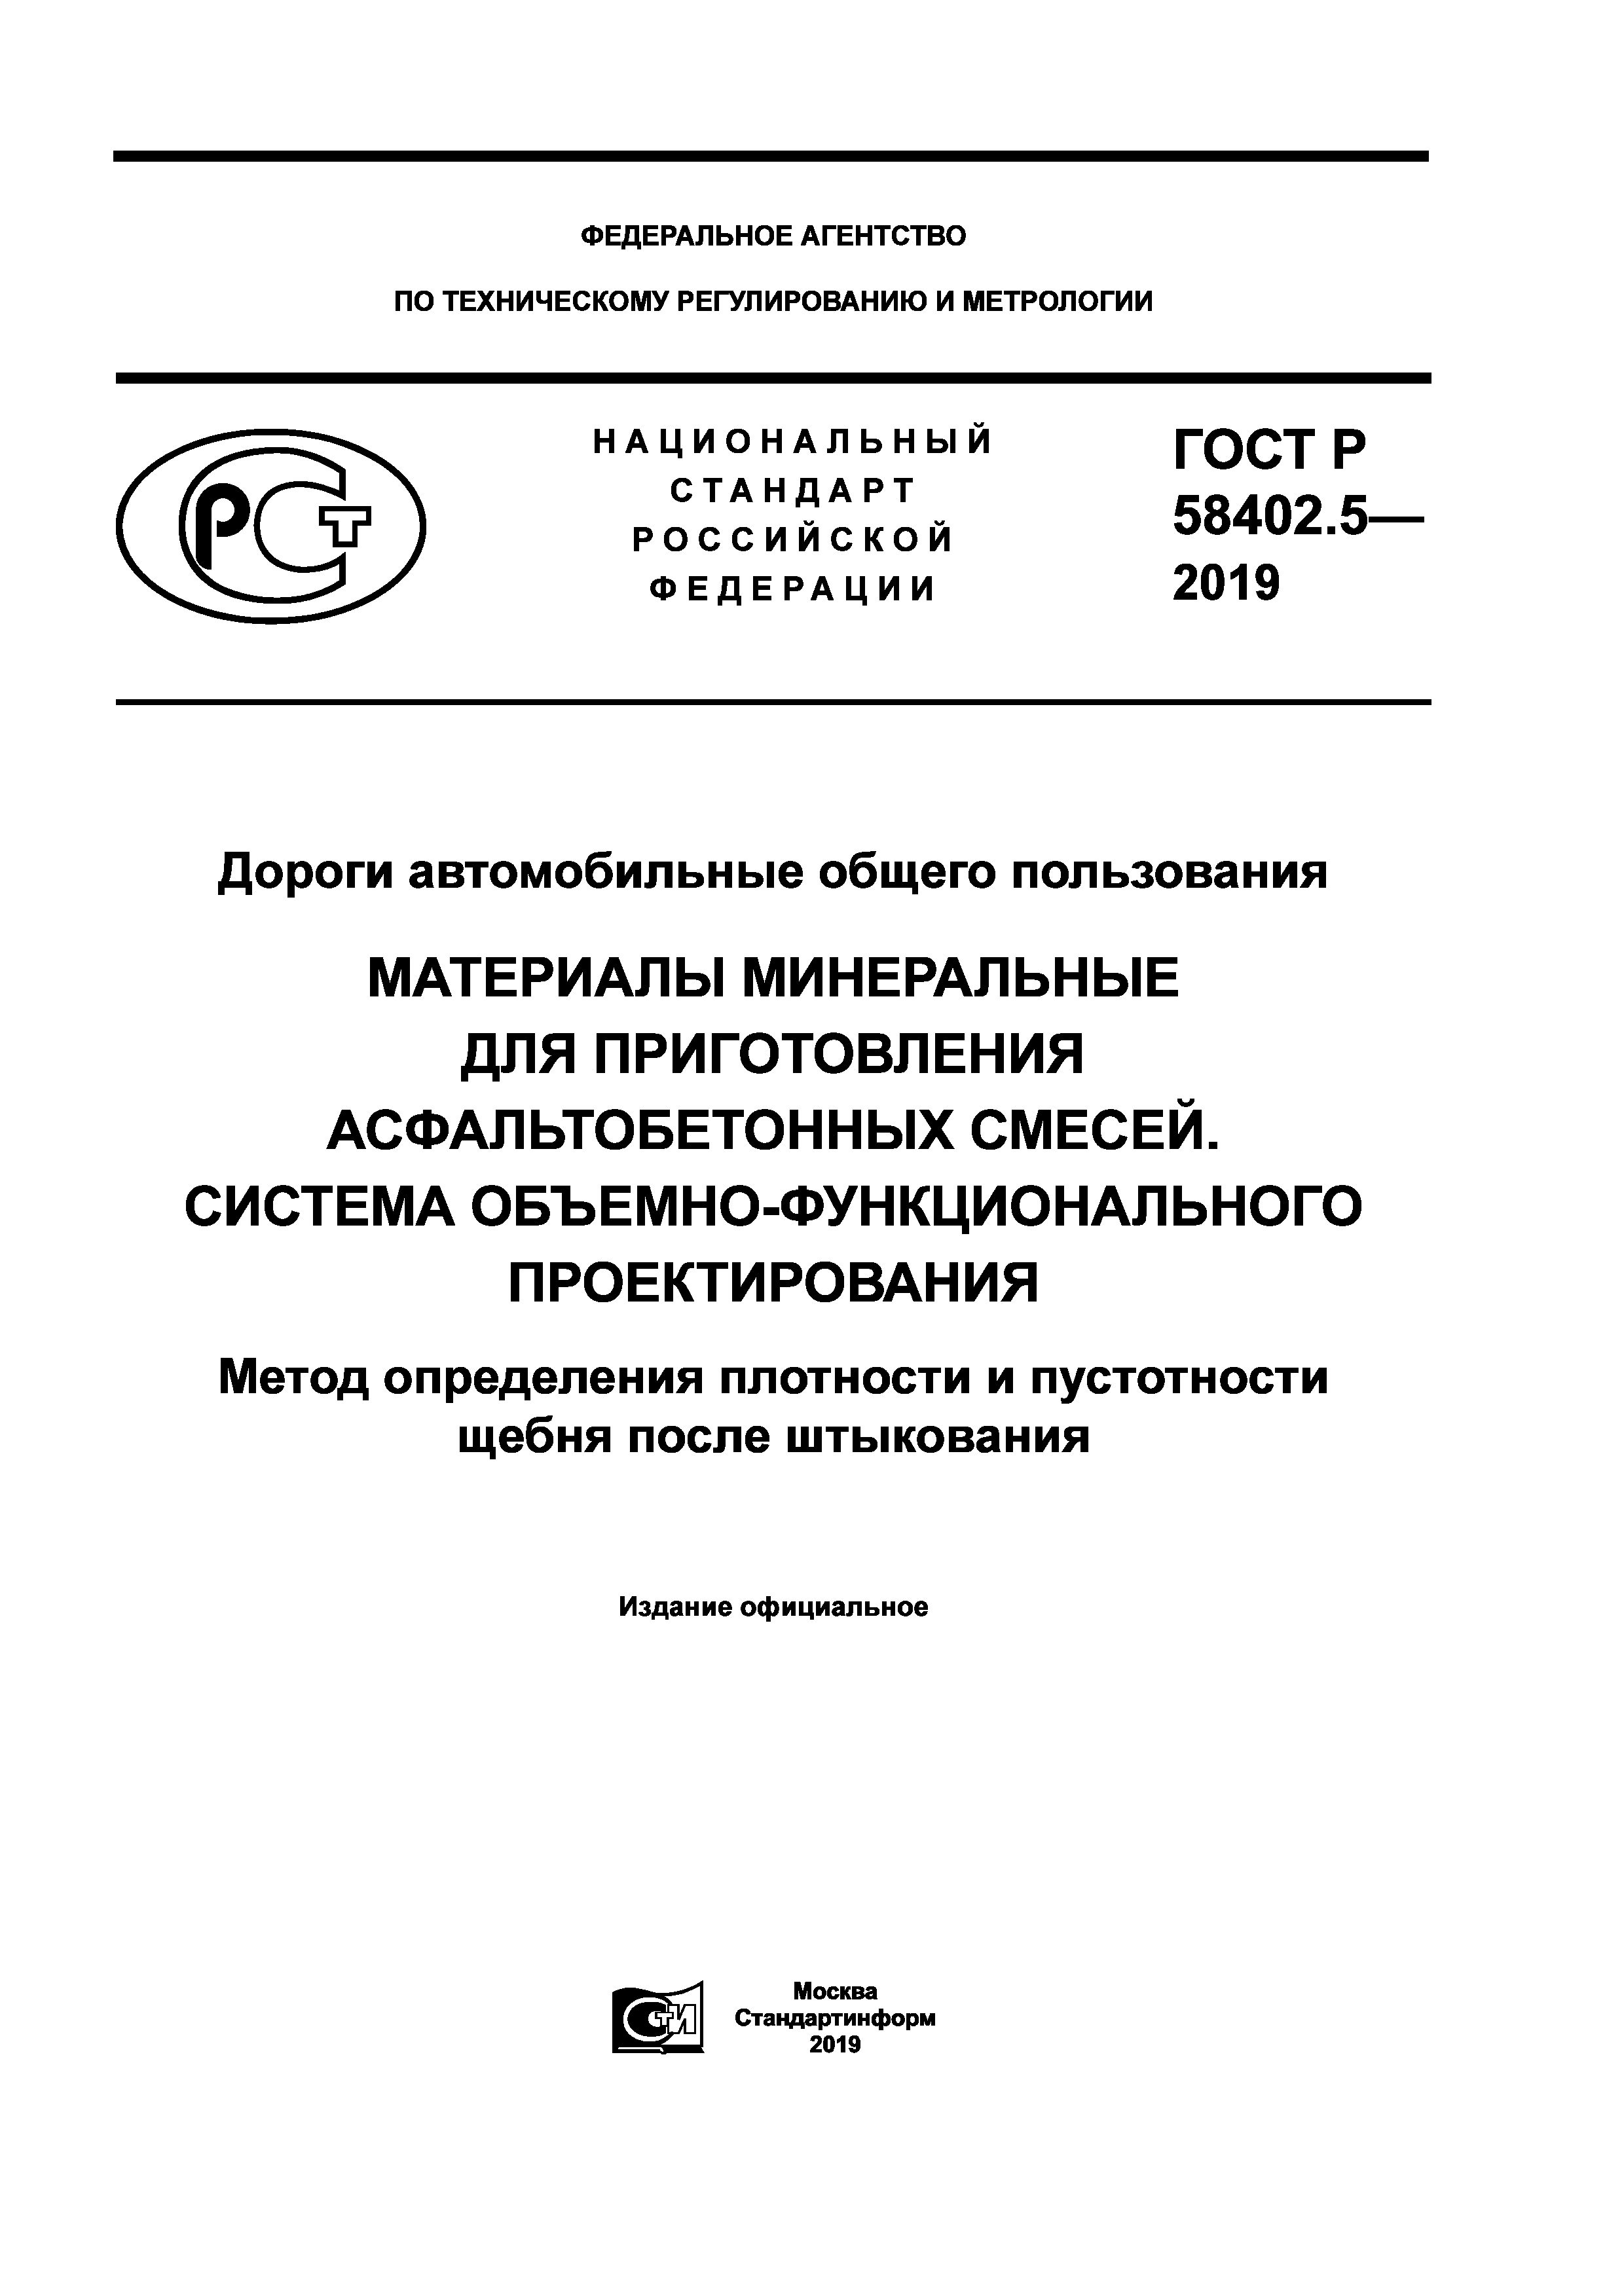 ГОСТ Р 58402.5-2019